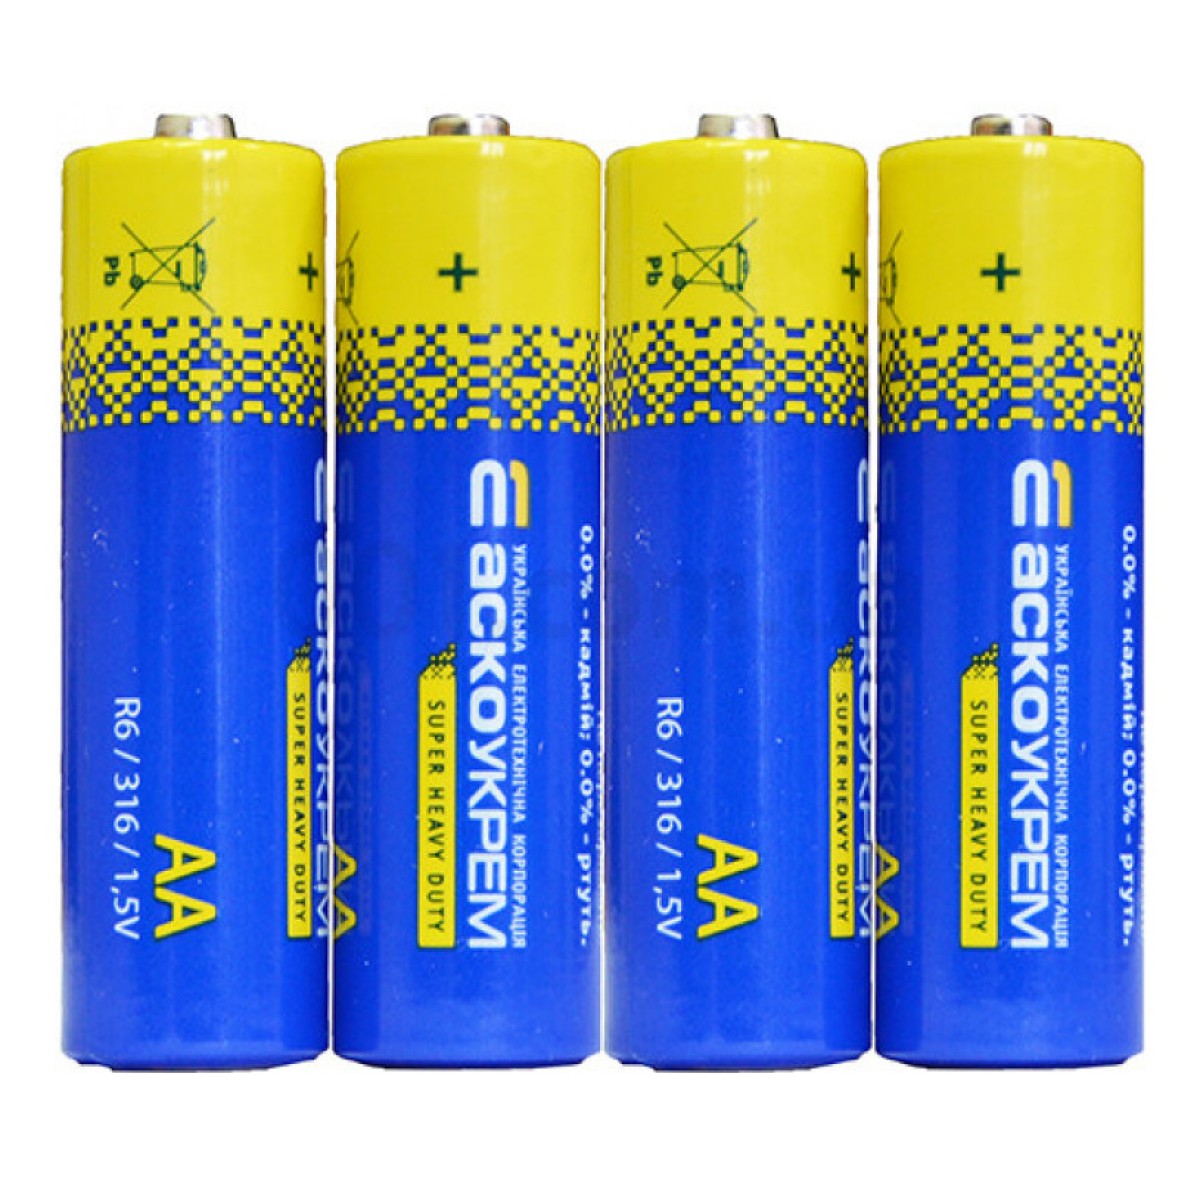 Батарейка солевая AА.R6.SP4, типоразмер AA упаковка shrink 4 шт., АСКО-УКРЕМ 98_96.jpg